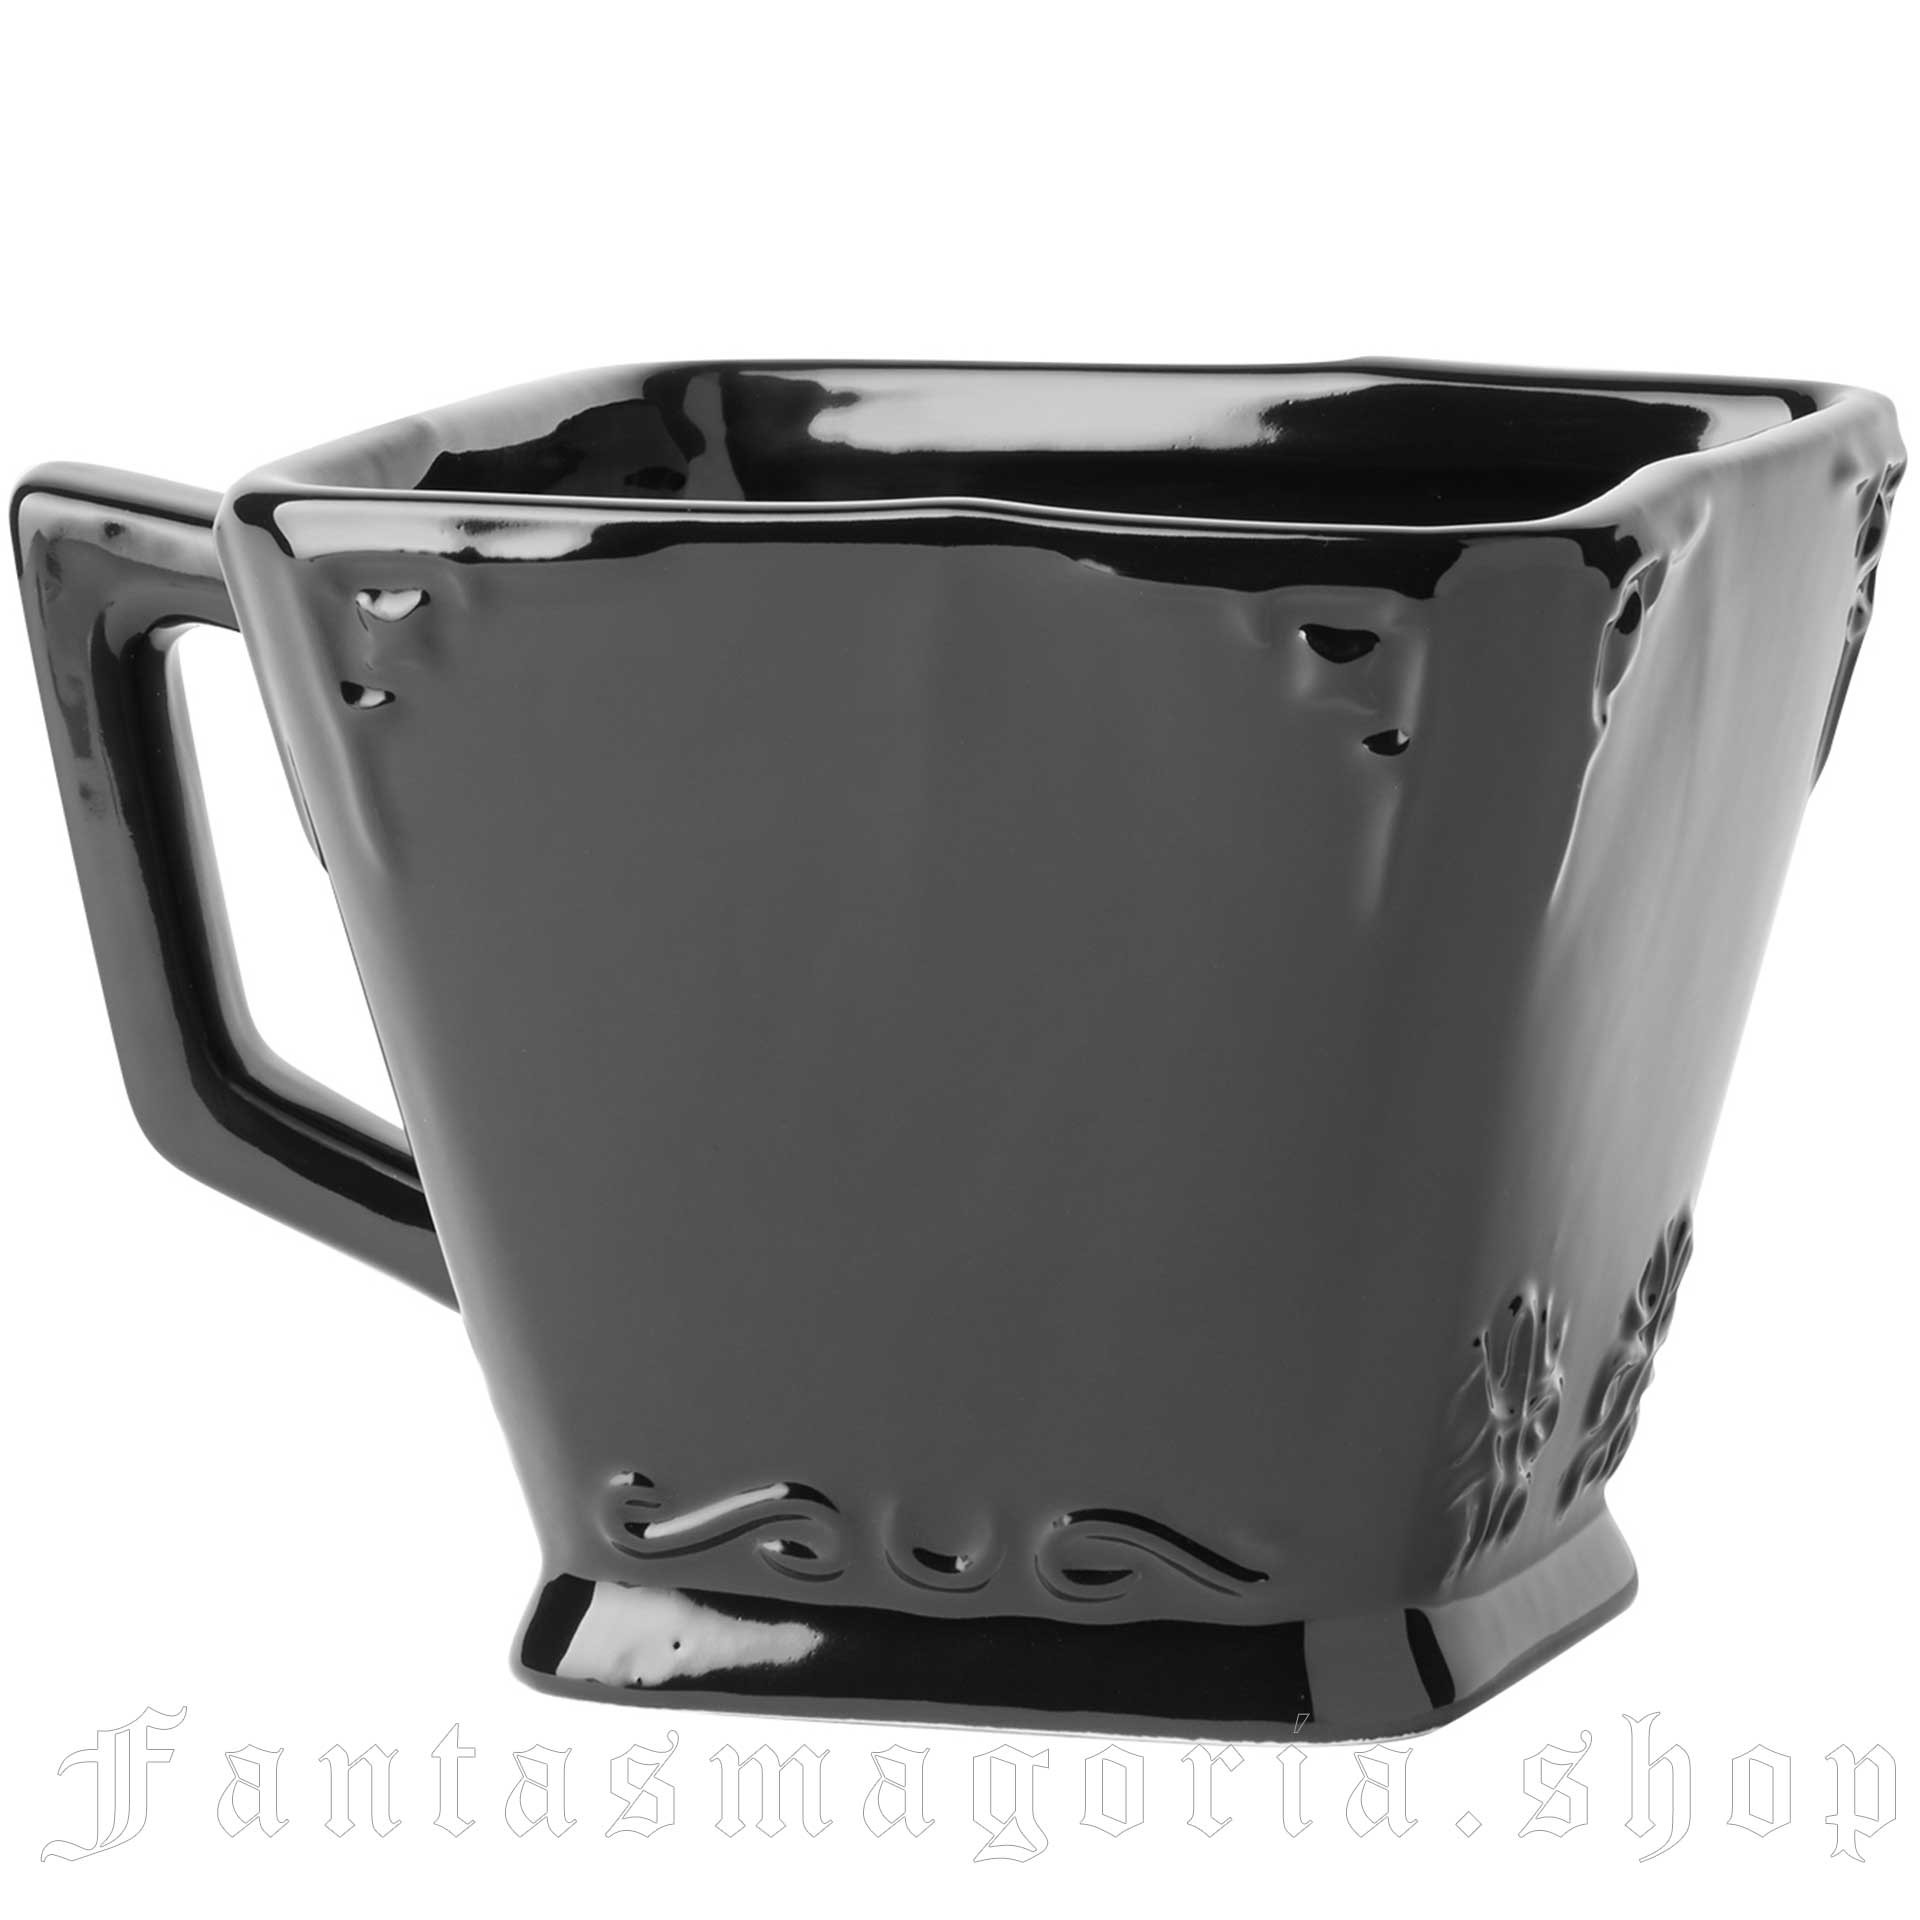 Kitsu Coffin Teacup